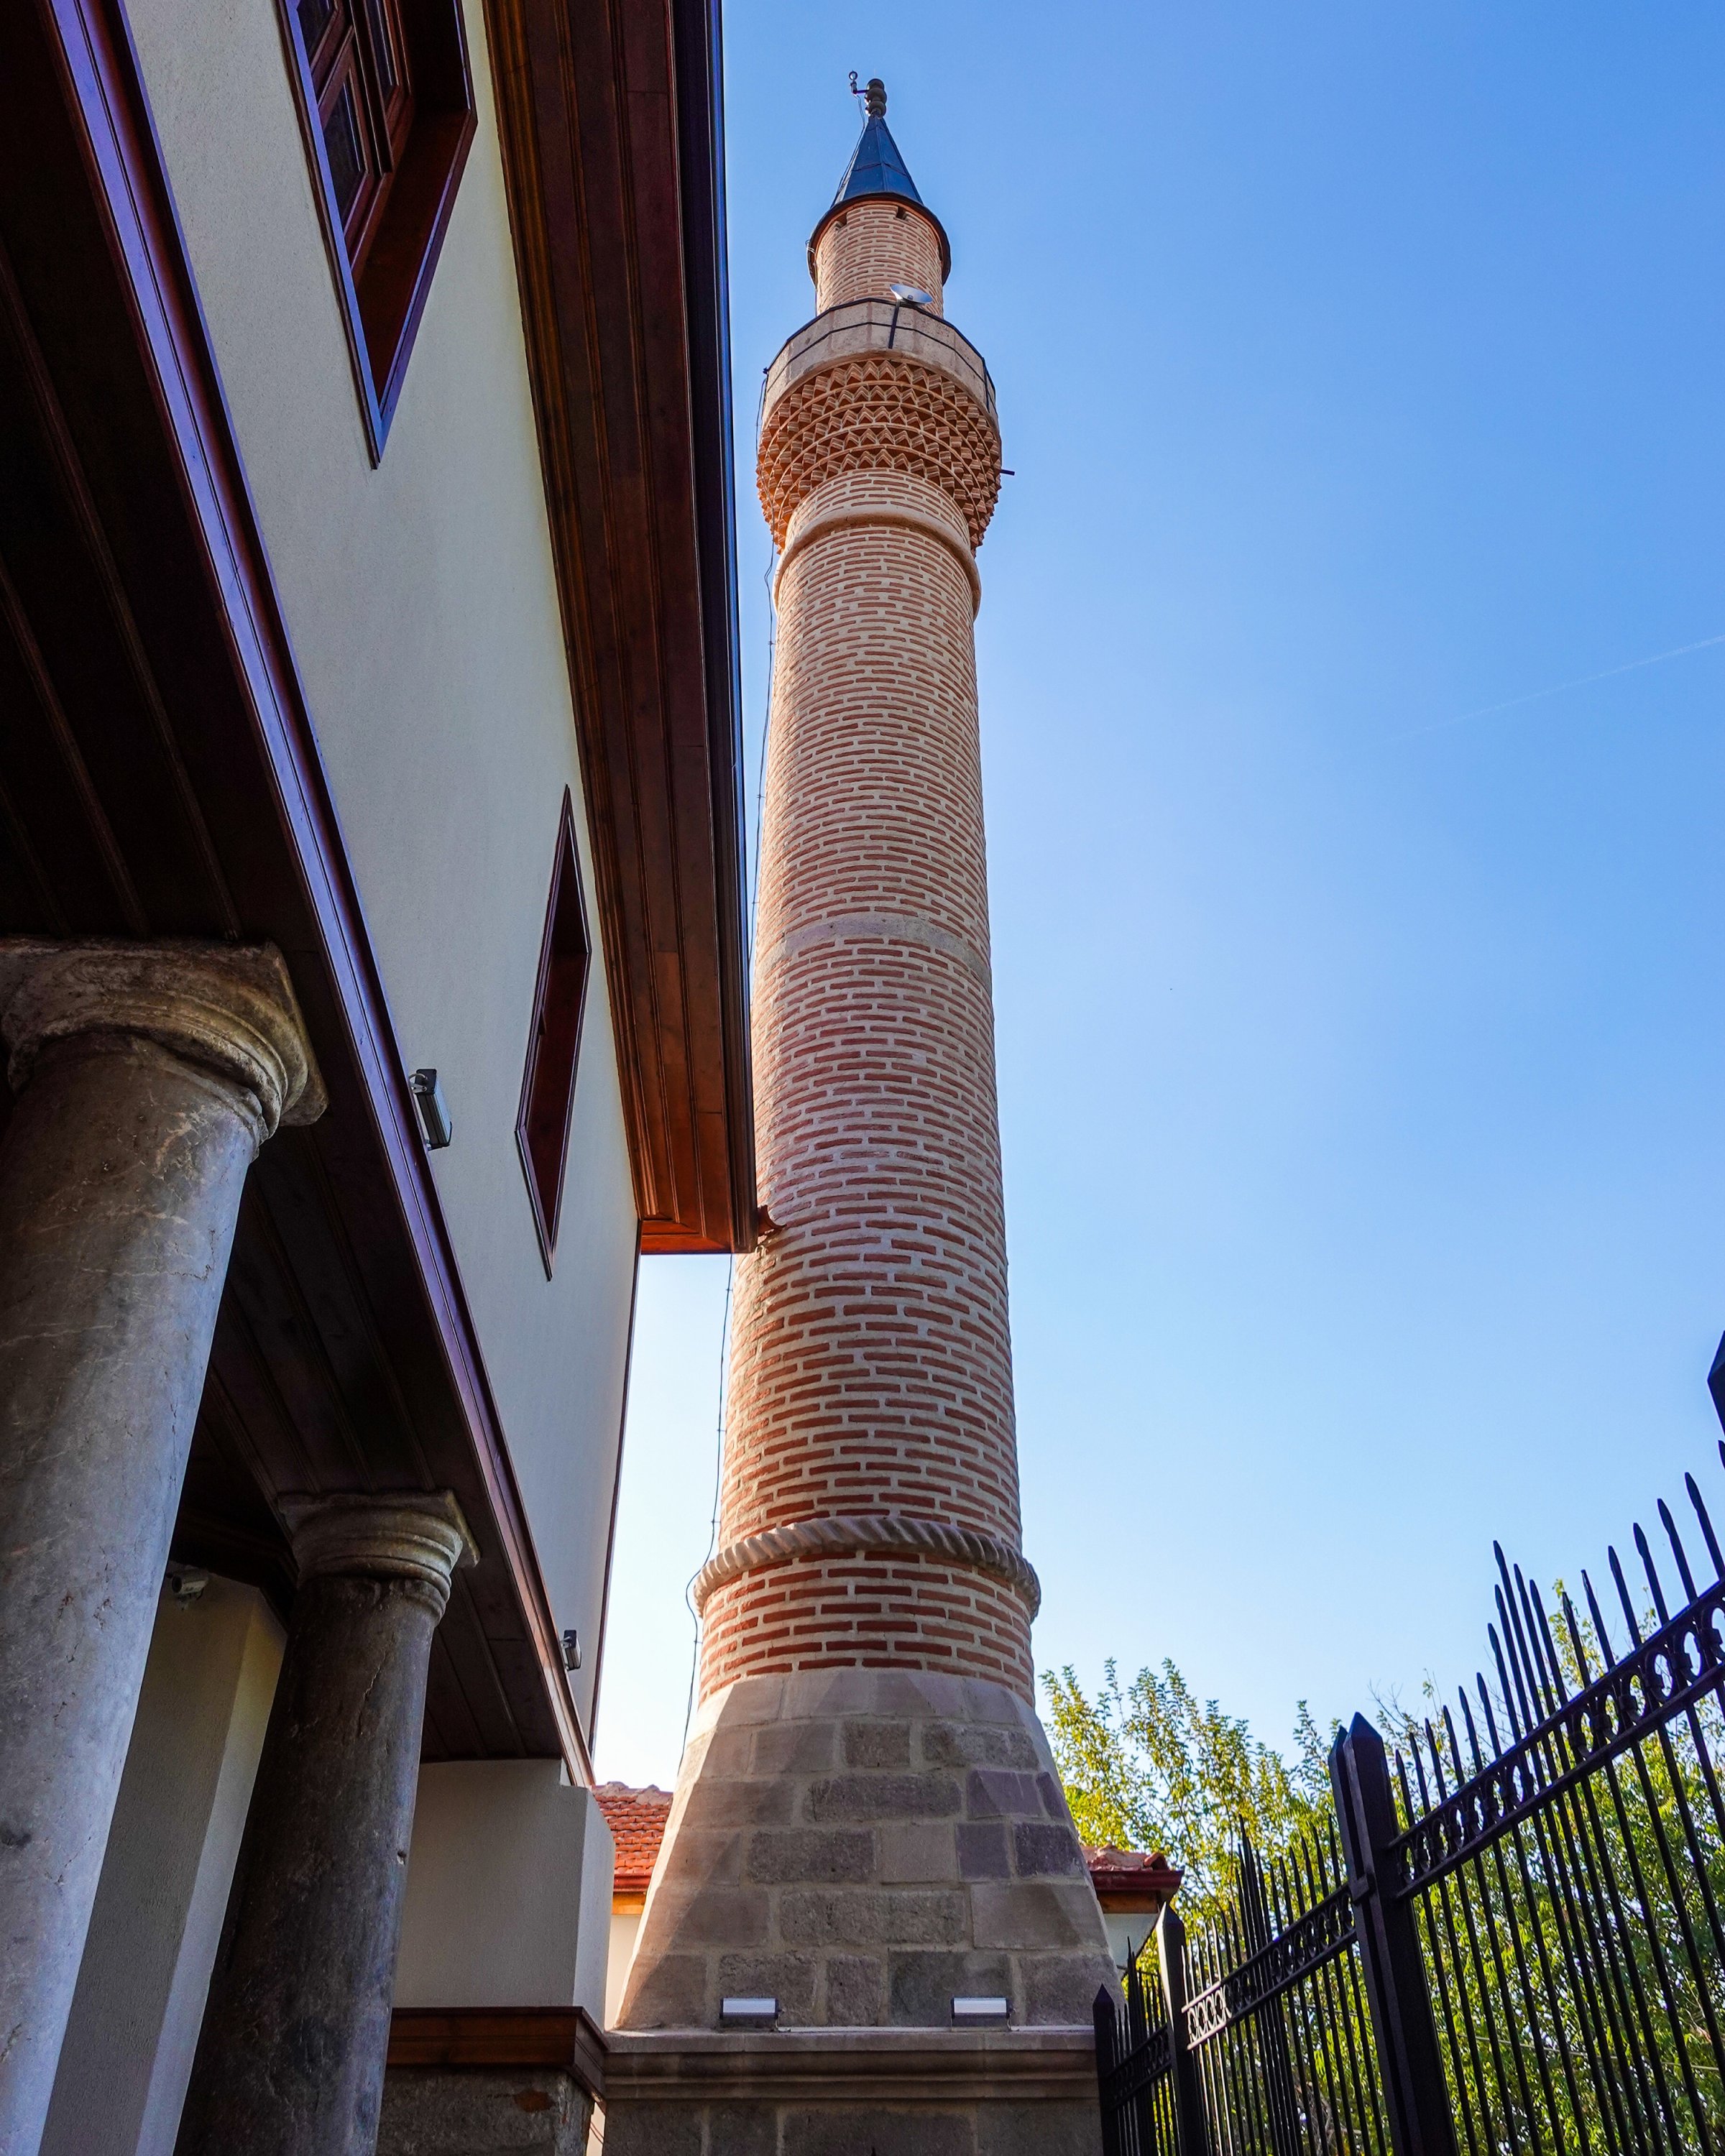 The minaret tower of the Sultan Alaaddin Mosque. (Photo by Argun Konuk)